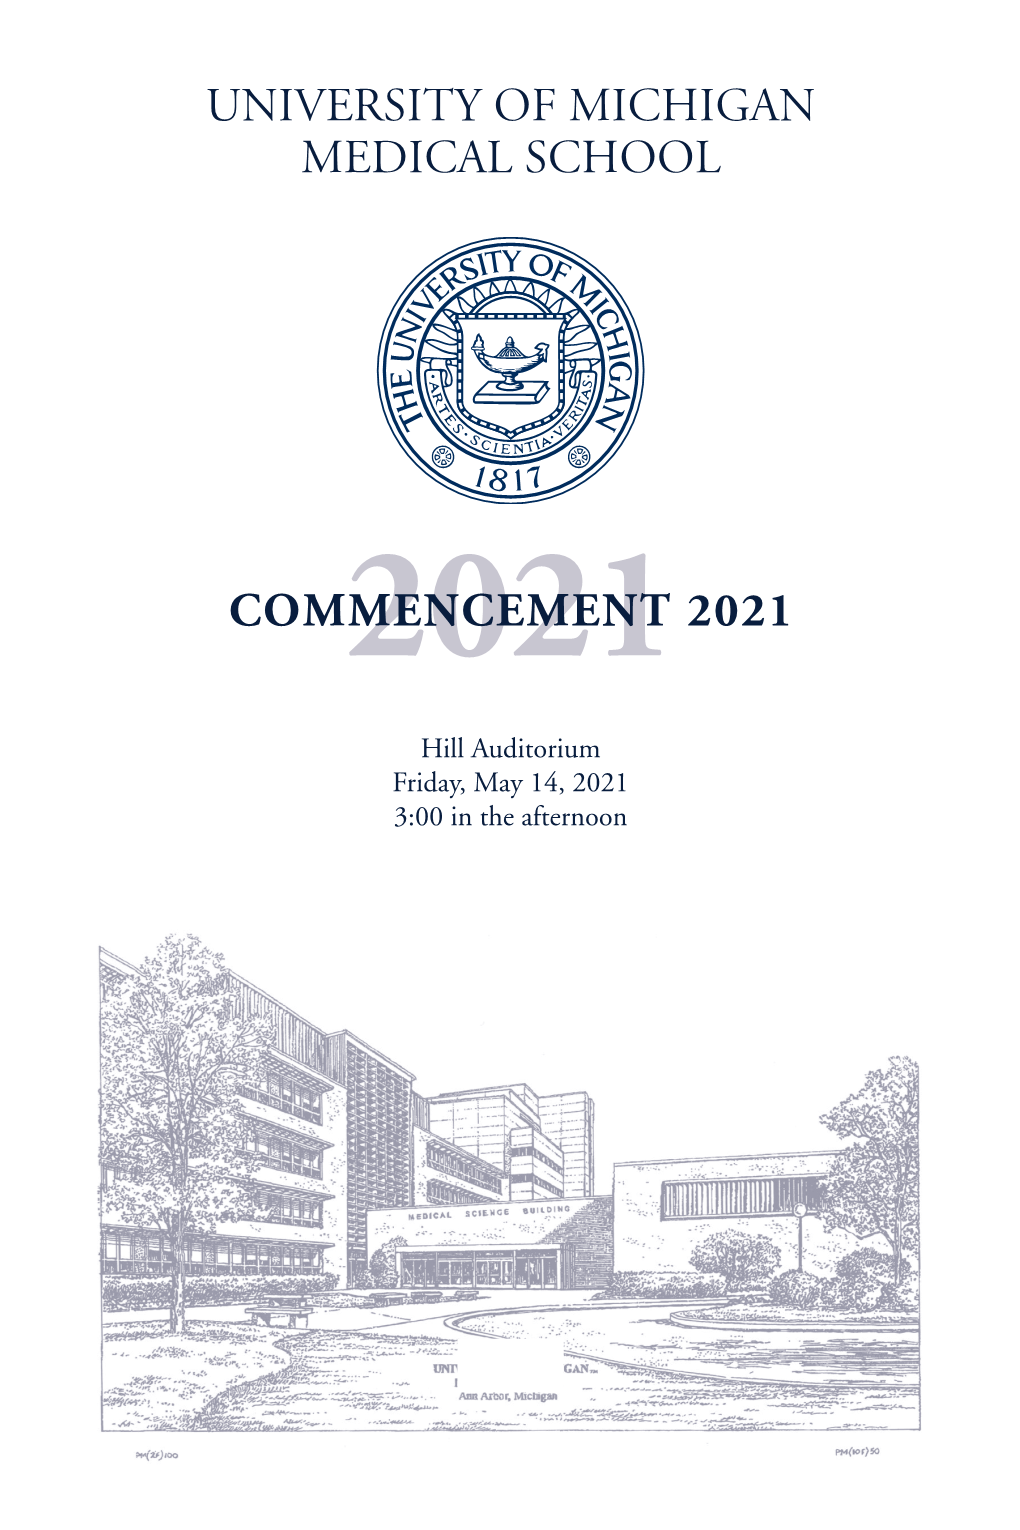 View the 2021 Commencement Program